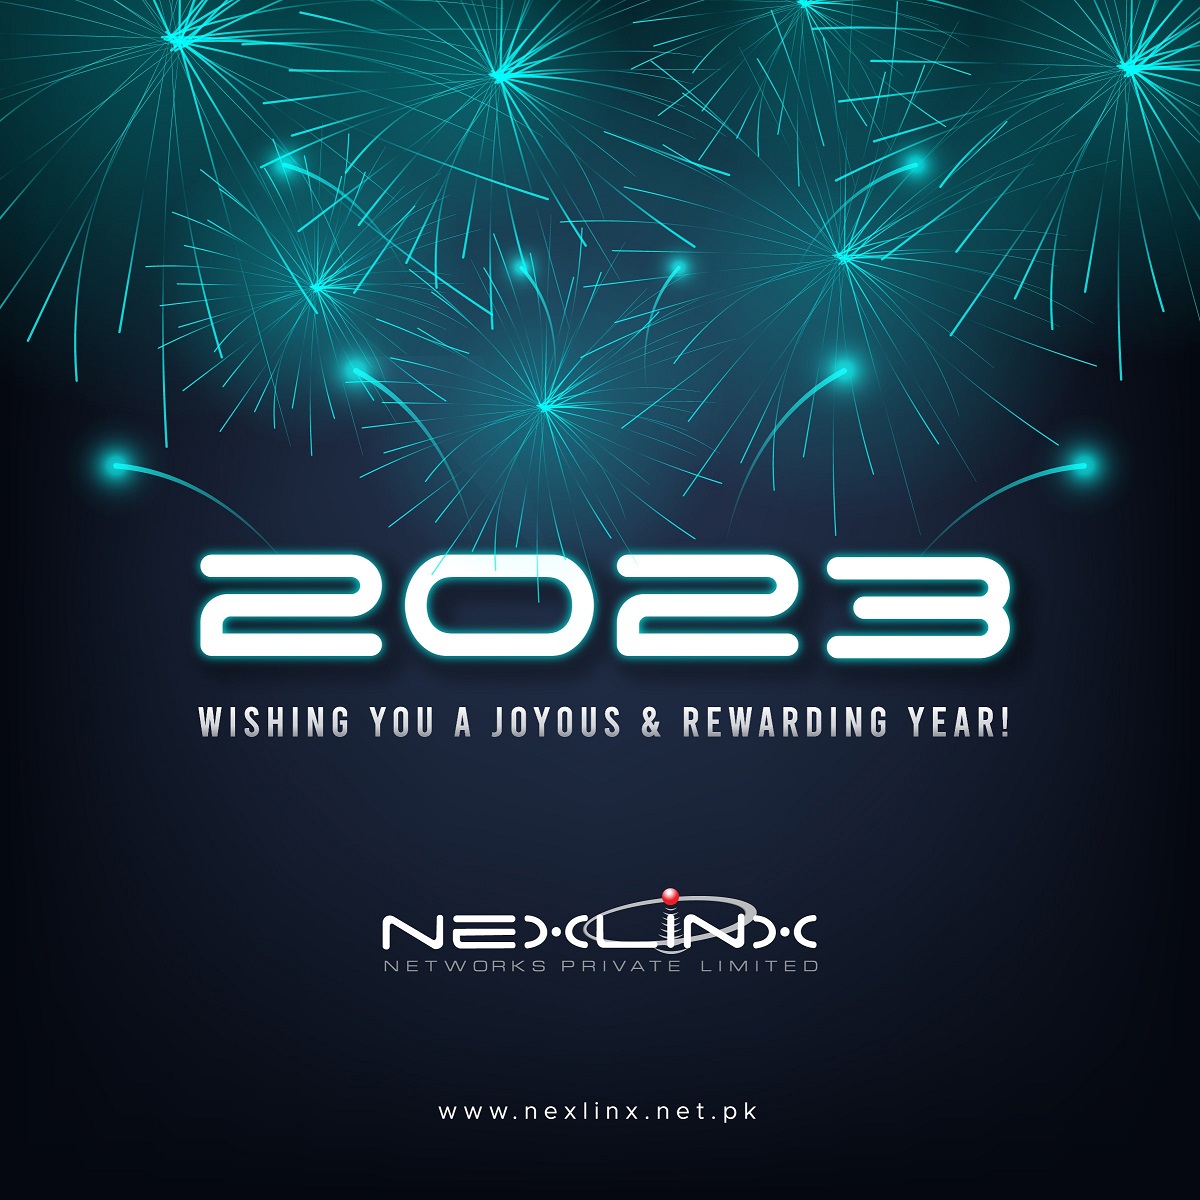 Nexlinx Happy New Year